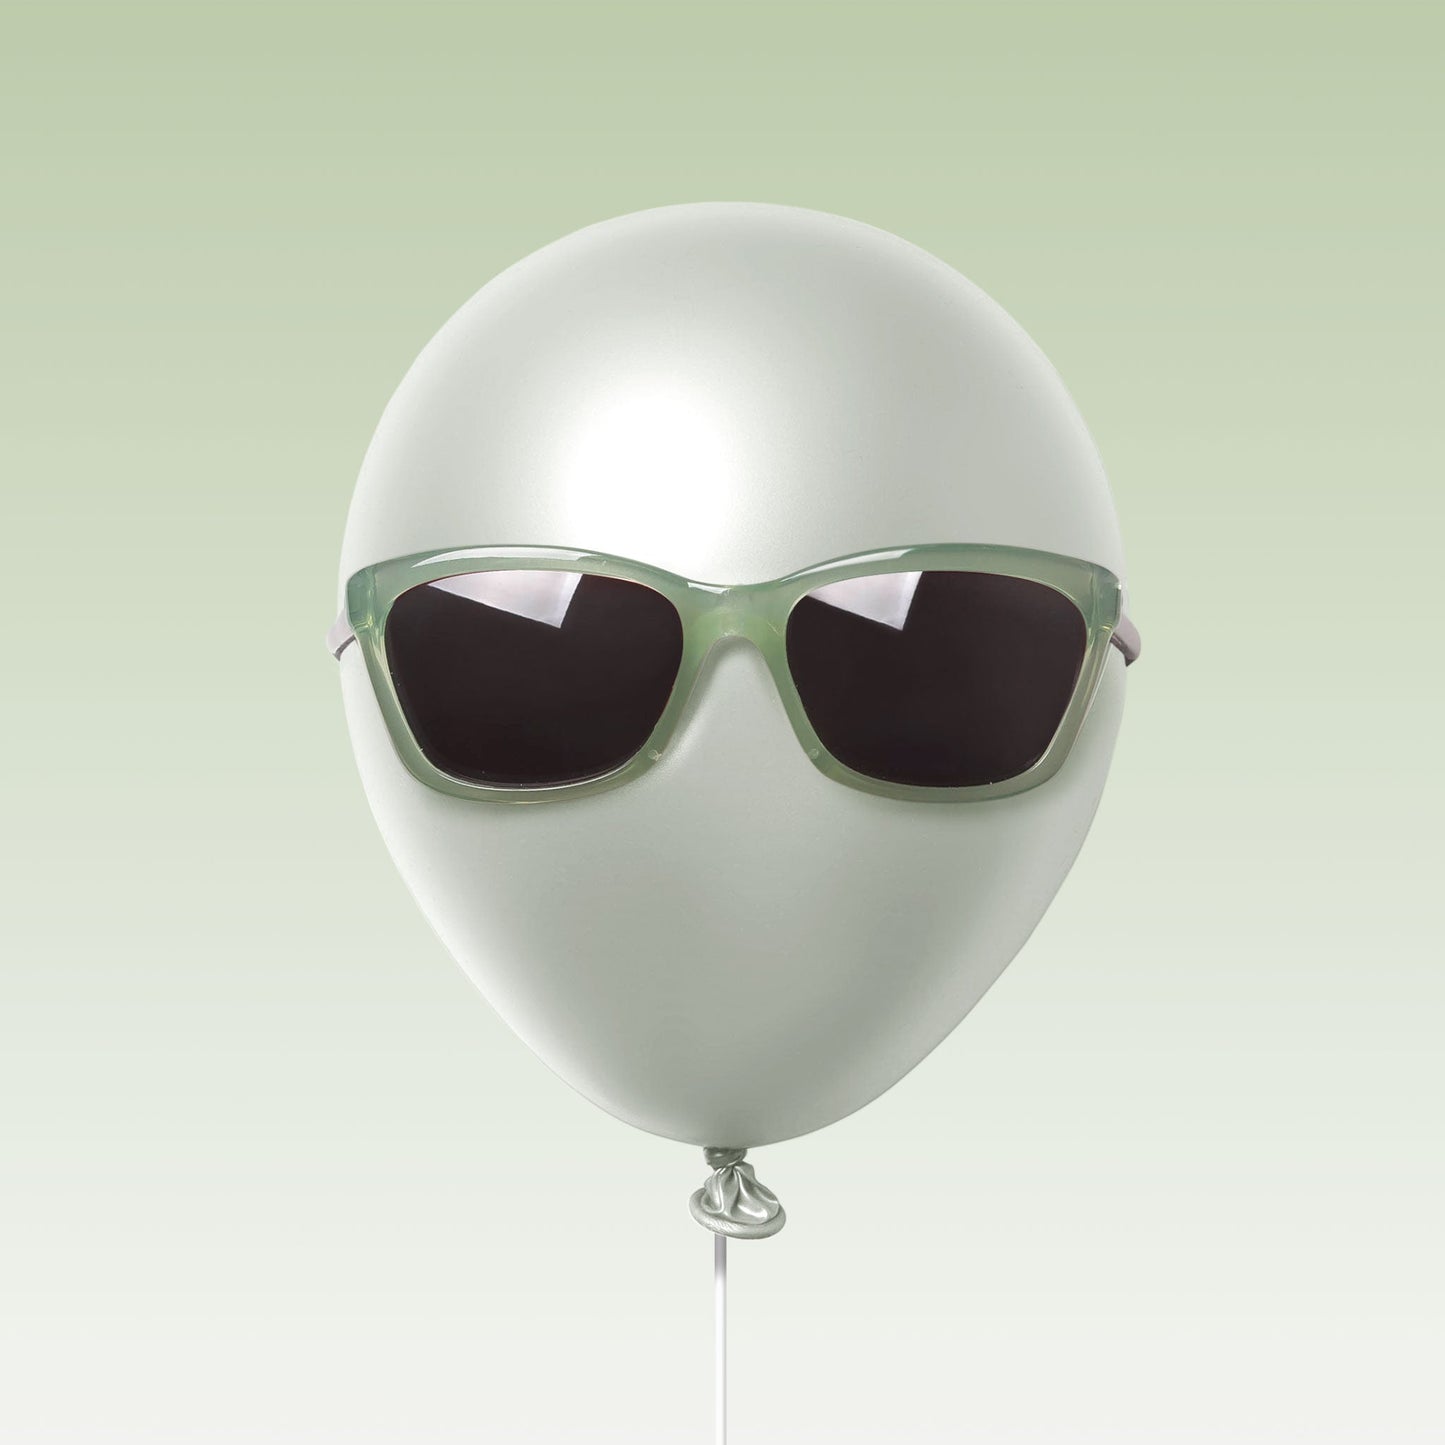 Paxley Sunglasses for Kids Pico Kiwi & Indigo 0-5 Balloon